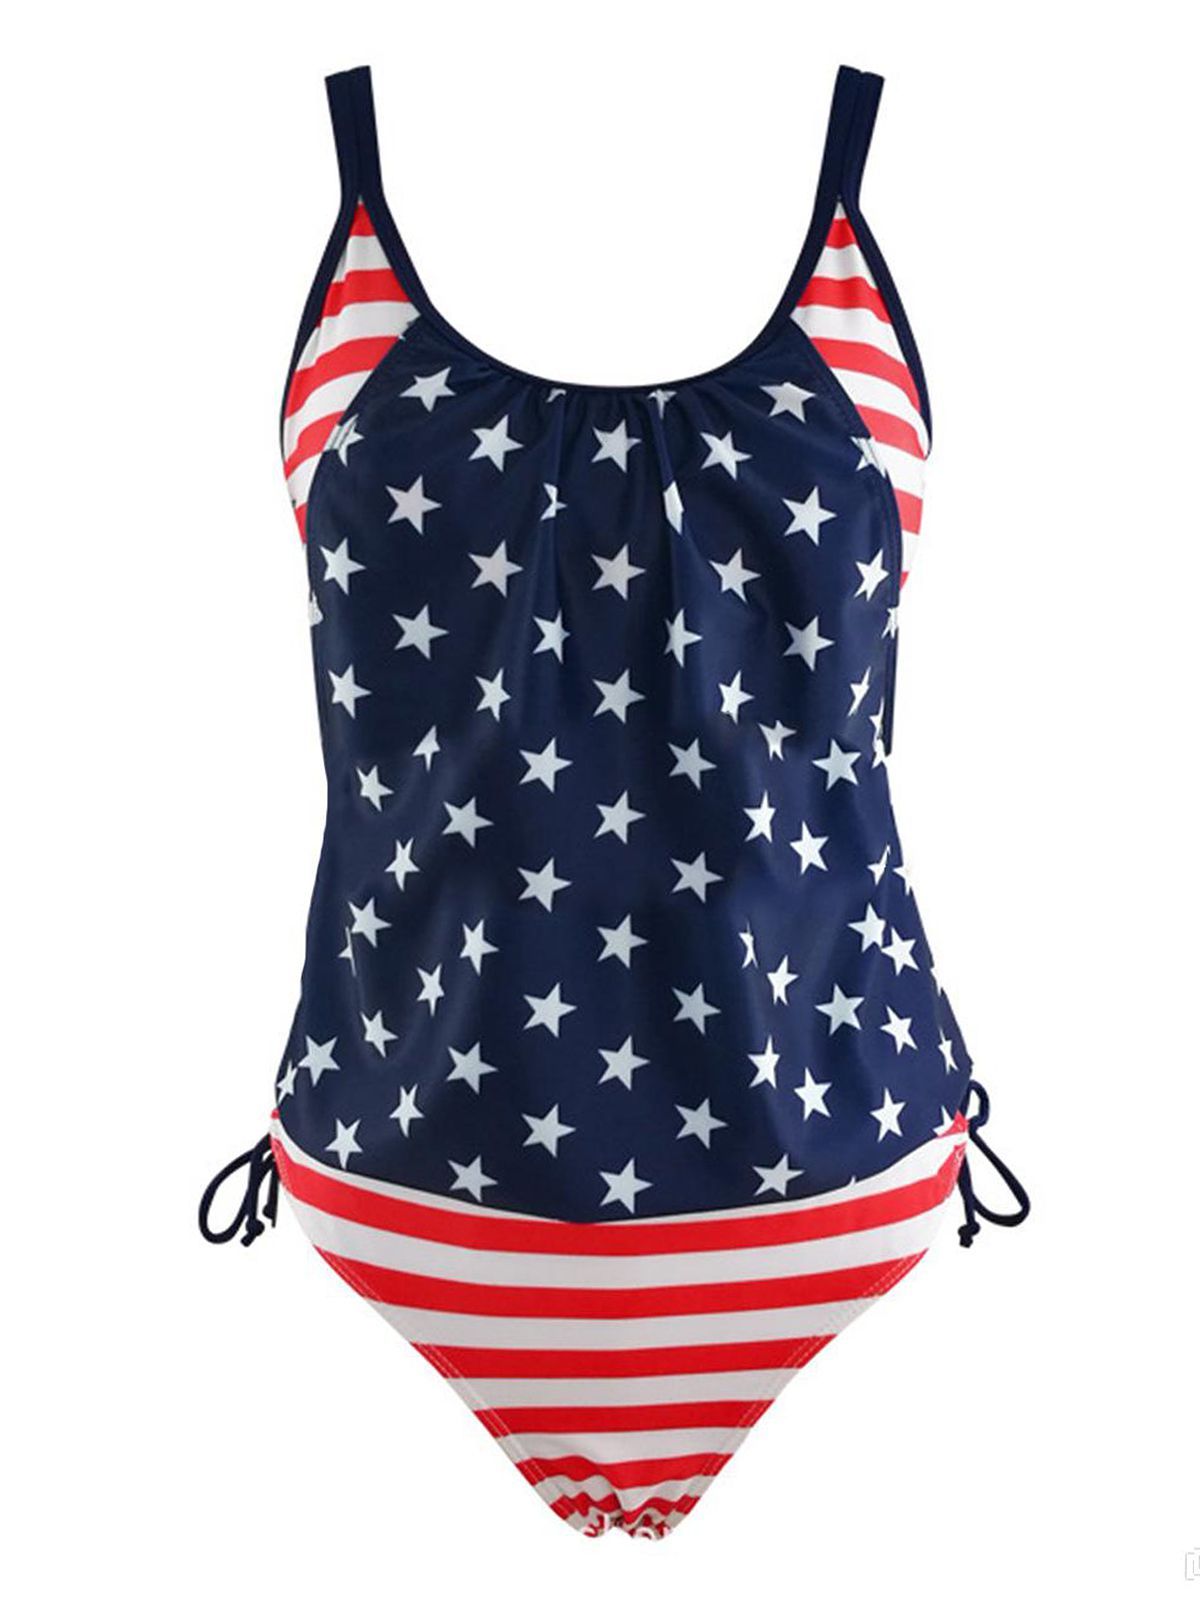 Upopby U-neck One-Piece Swimsuit American Flag Monokini